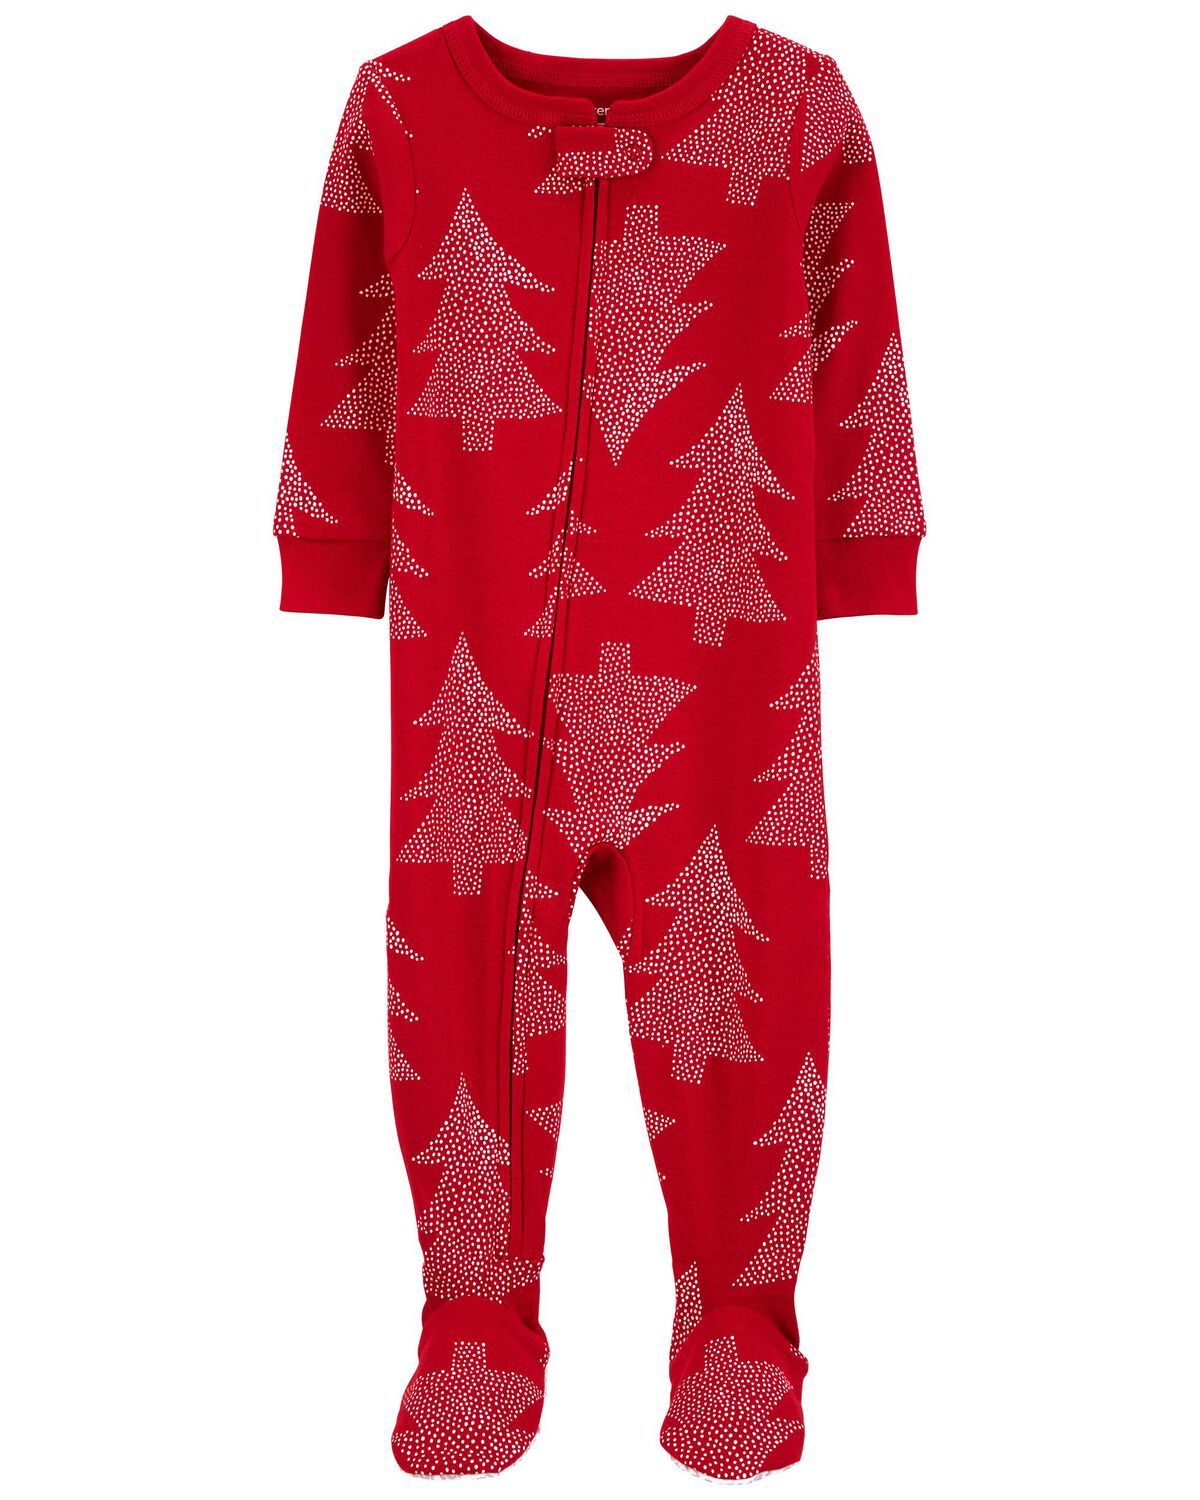 Red Toddler 1-Piece Christmas 100% Snug Fit Cotton Pajamas | carters.com | Carter's